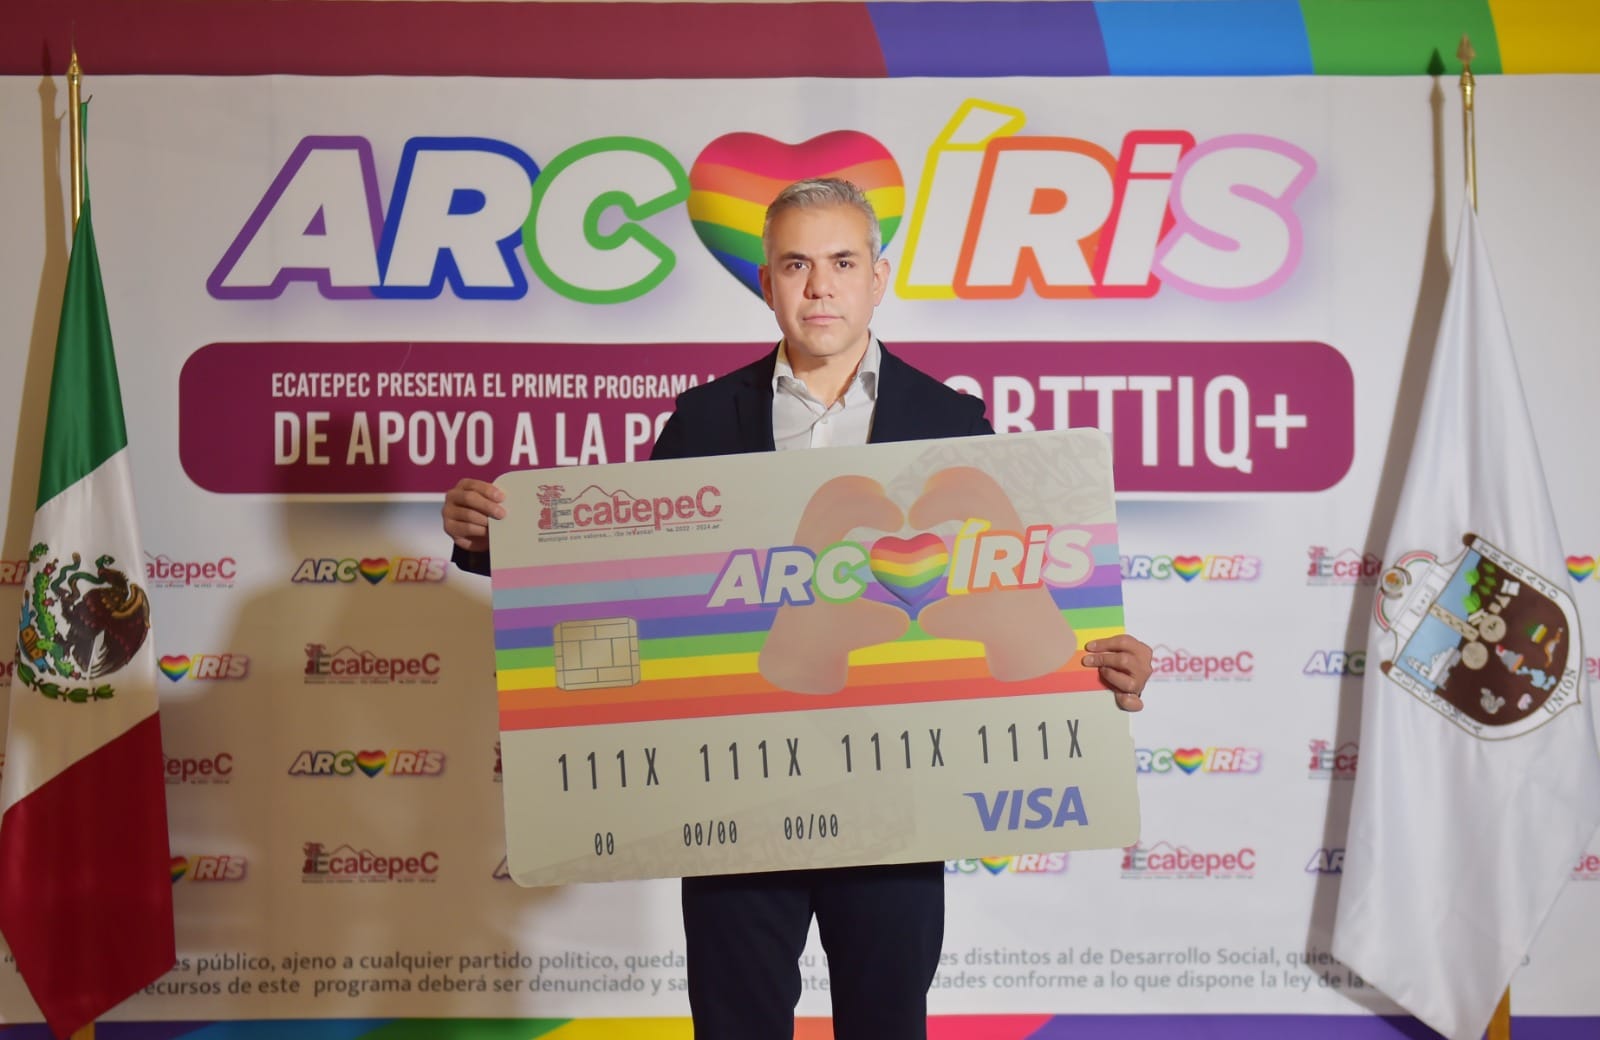 Cómo tramitar la “Tarjeta Arcoiris” en Ecatepec para la comunidad LGBT+ que paga 10 mil pesos